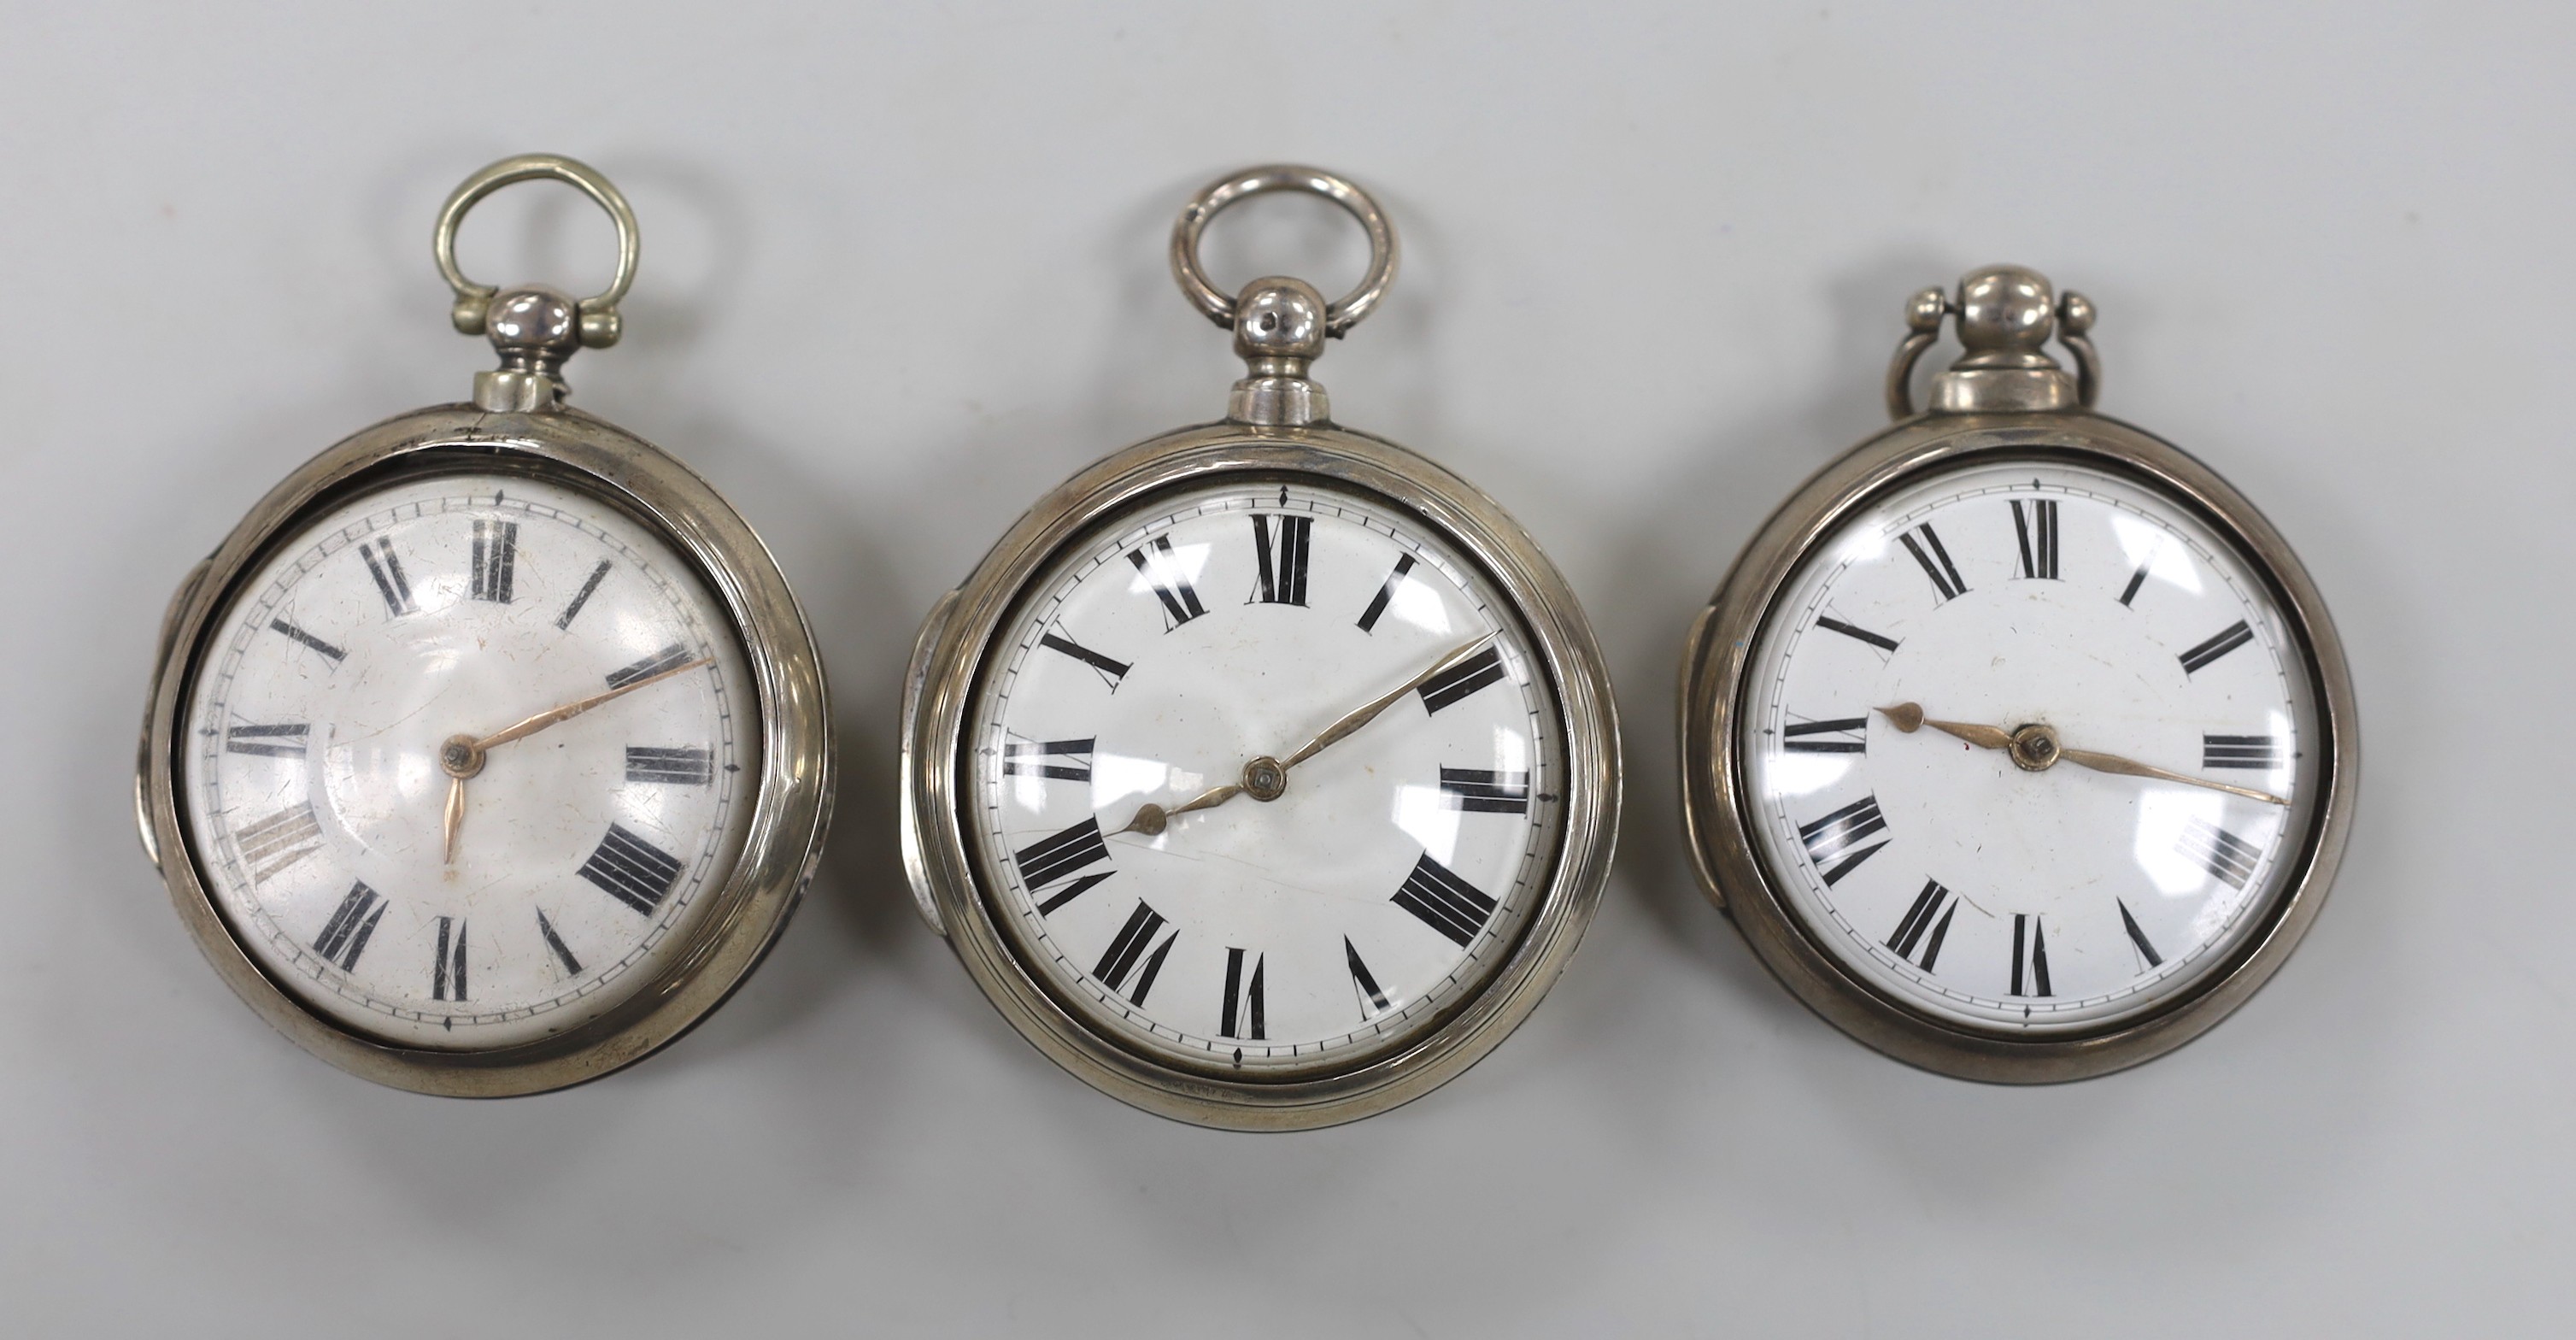 Three 19th century silver pair cased keywind verge pocket watches, by P. Matthew of Uckfield, the